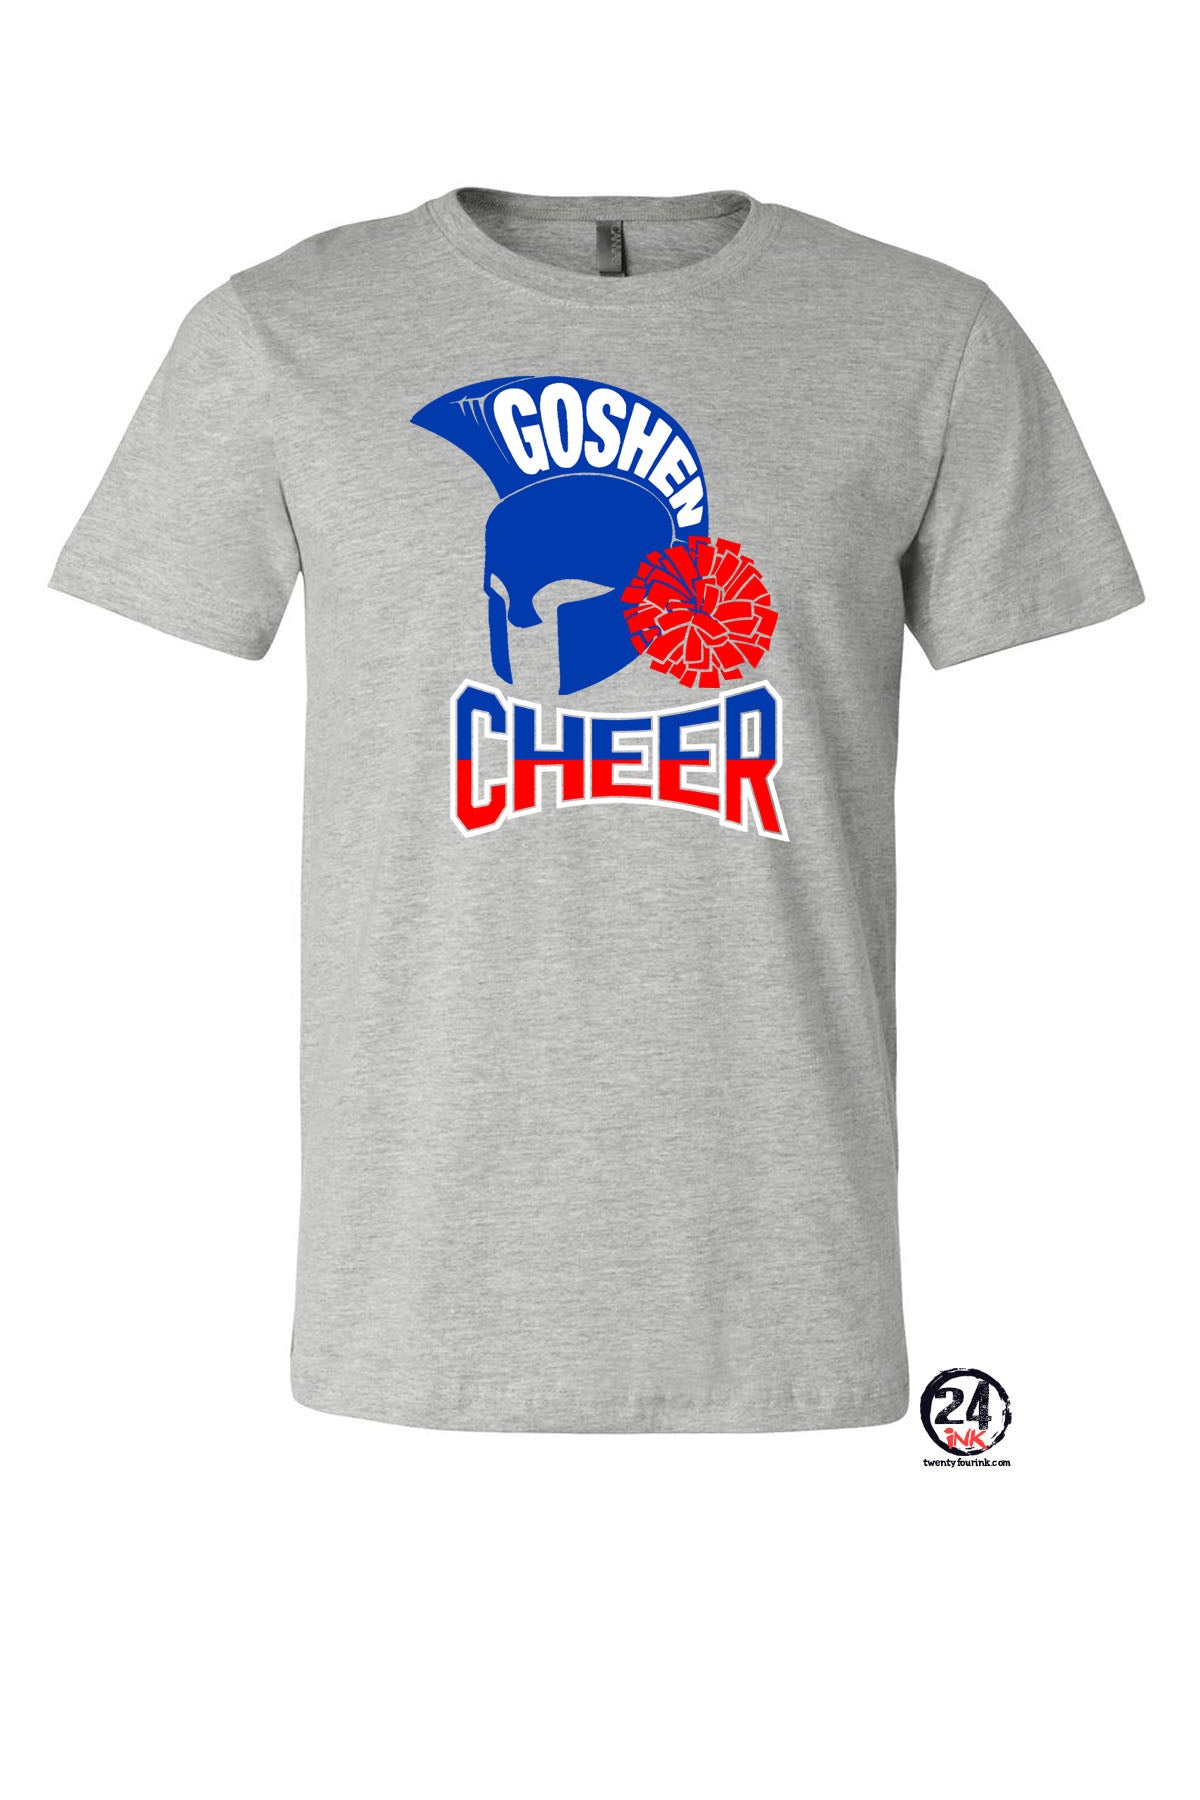 Goshen Cheer Design 8 T-Shirt